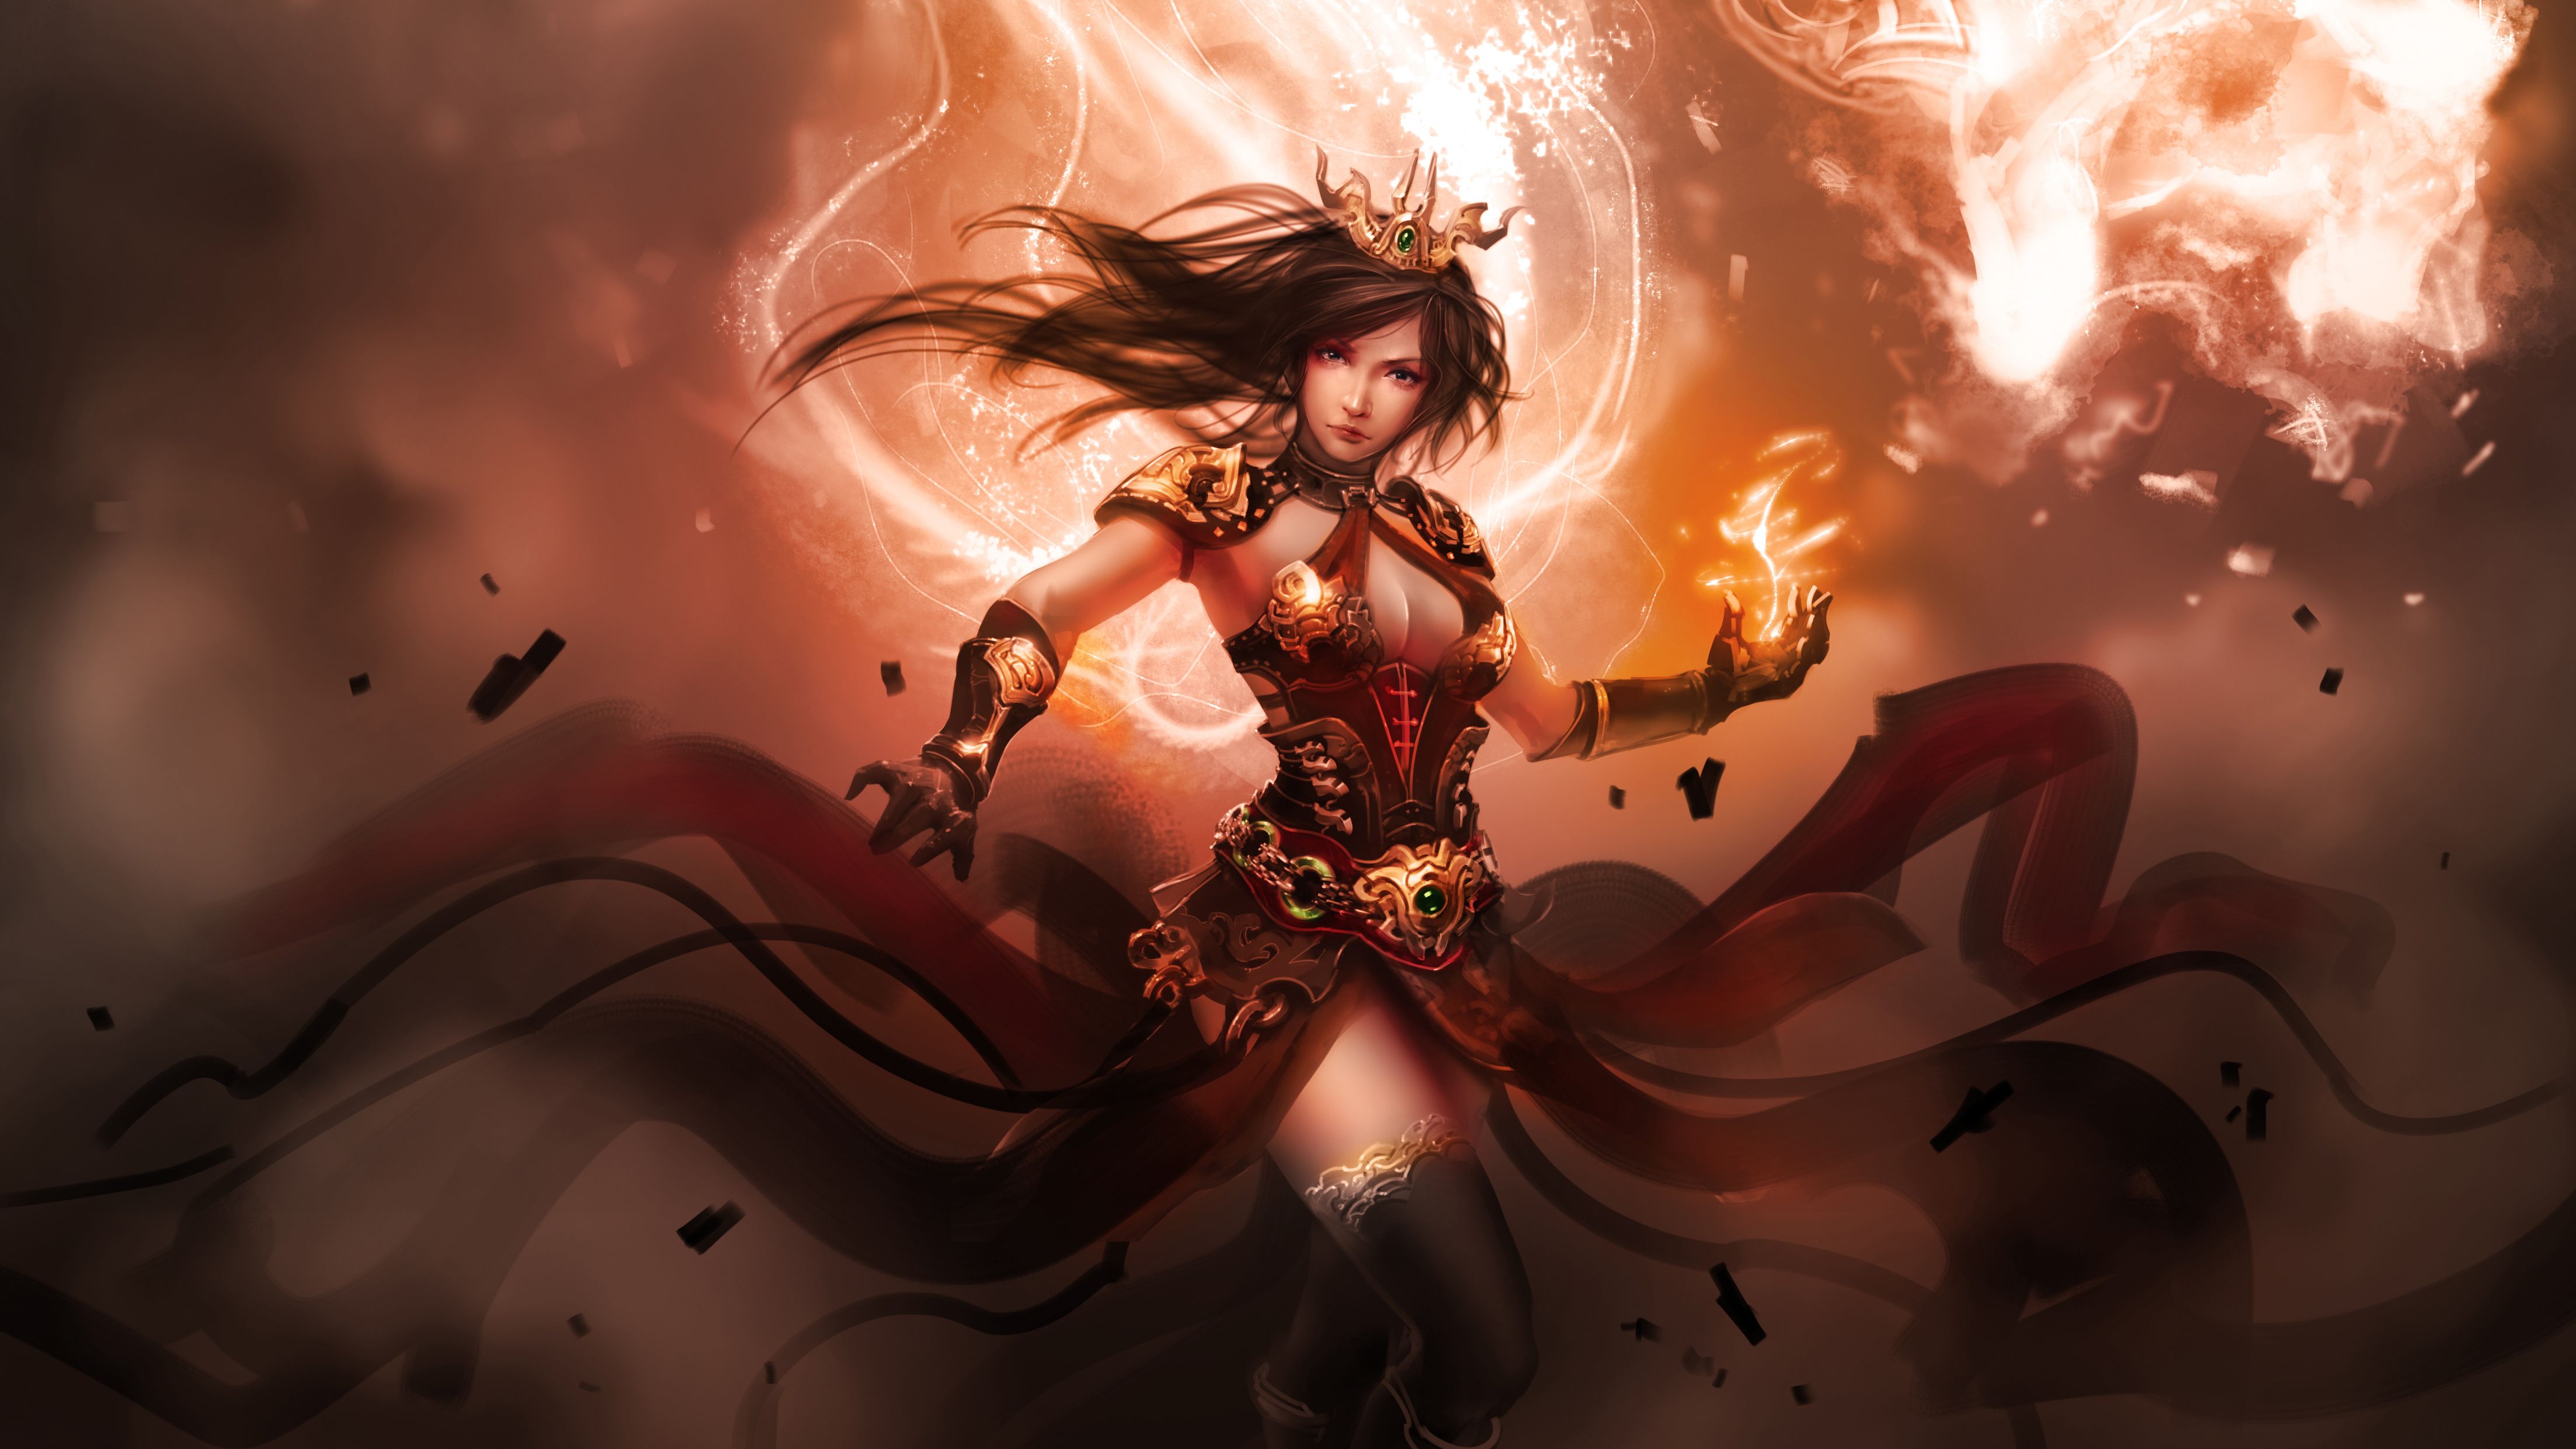 Female Warrior Fantasy 4k, HD Artist, 4k Wallpaper, Image